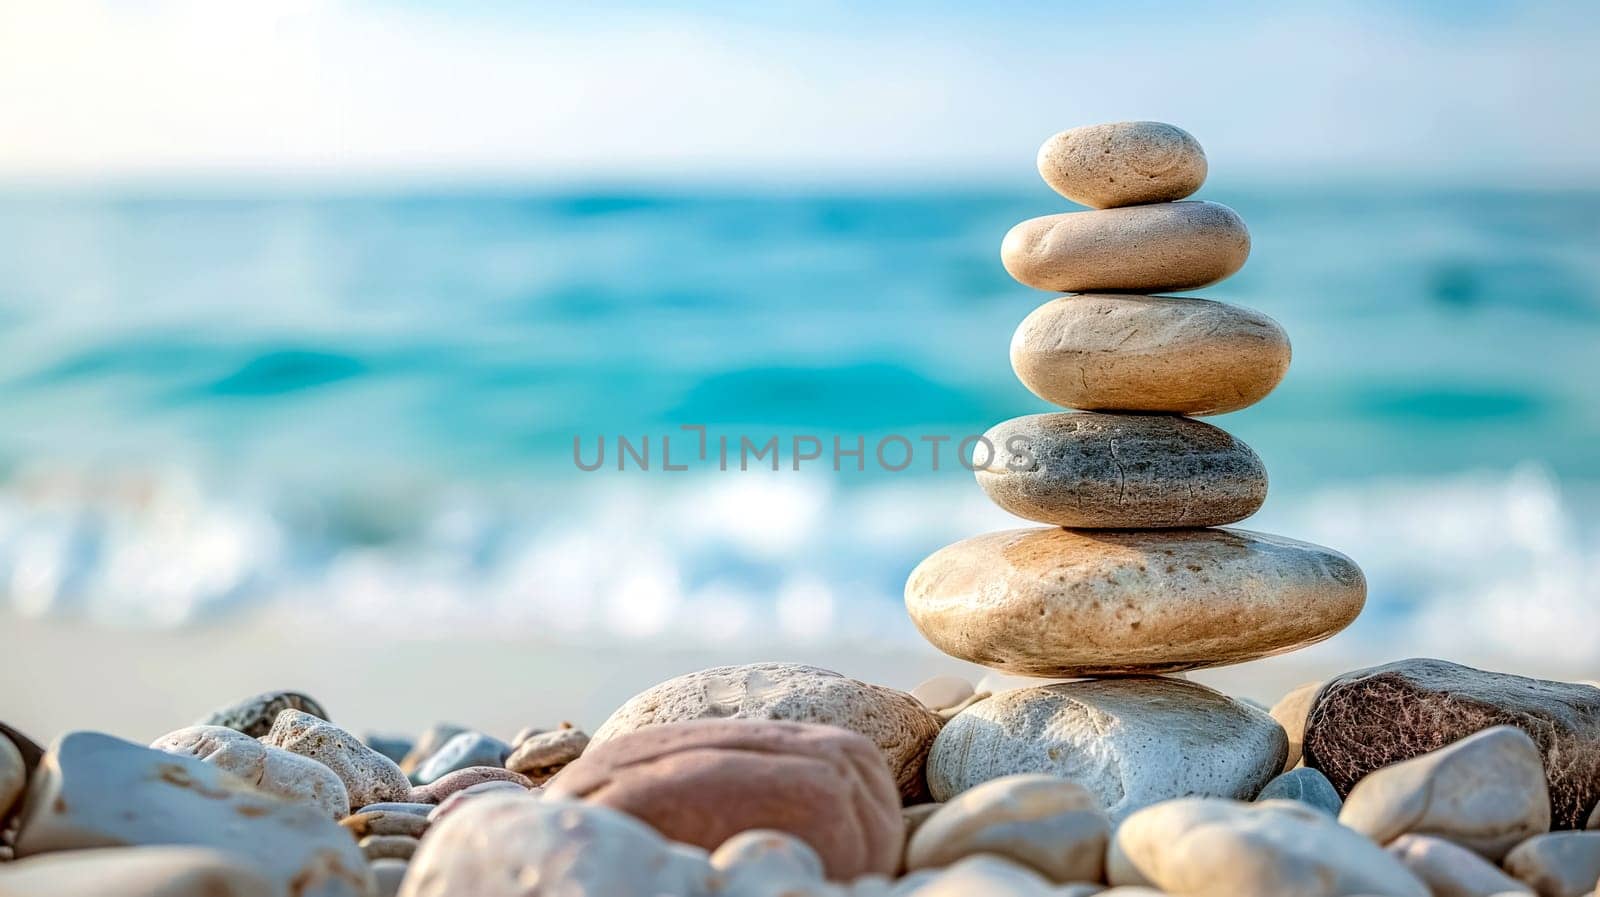 Zen stones balance on pebble beach with ocean background by Edophoto